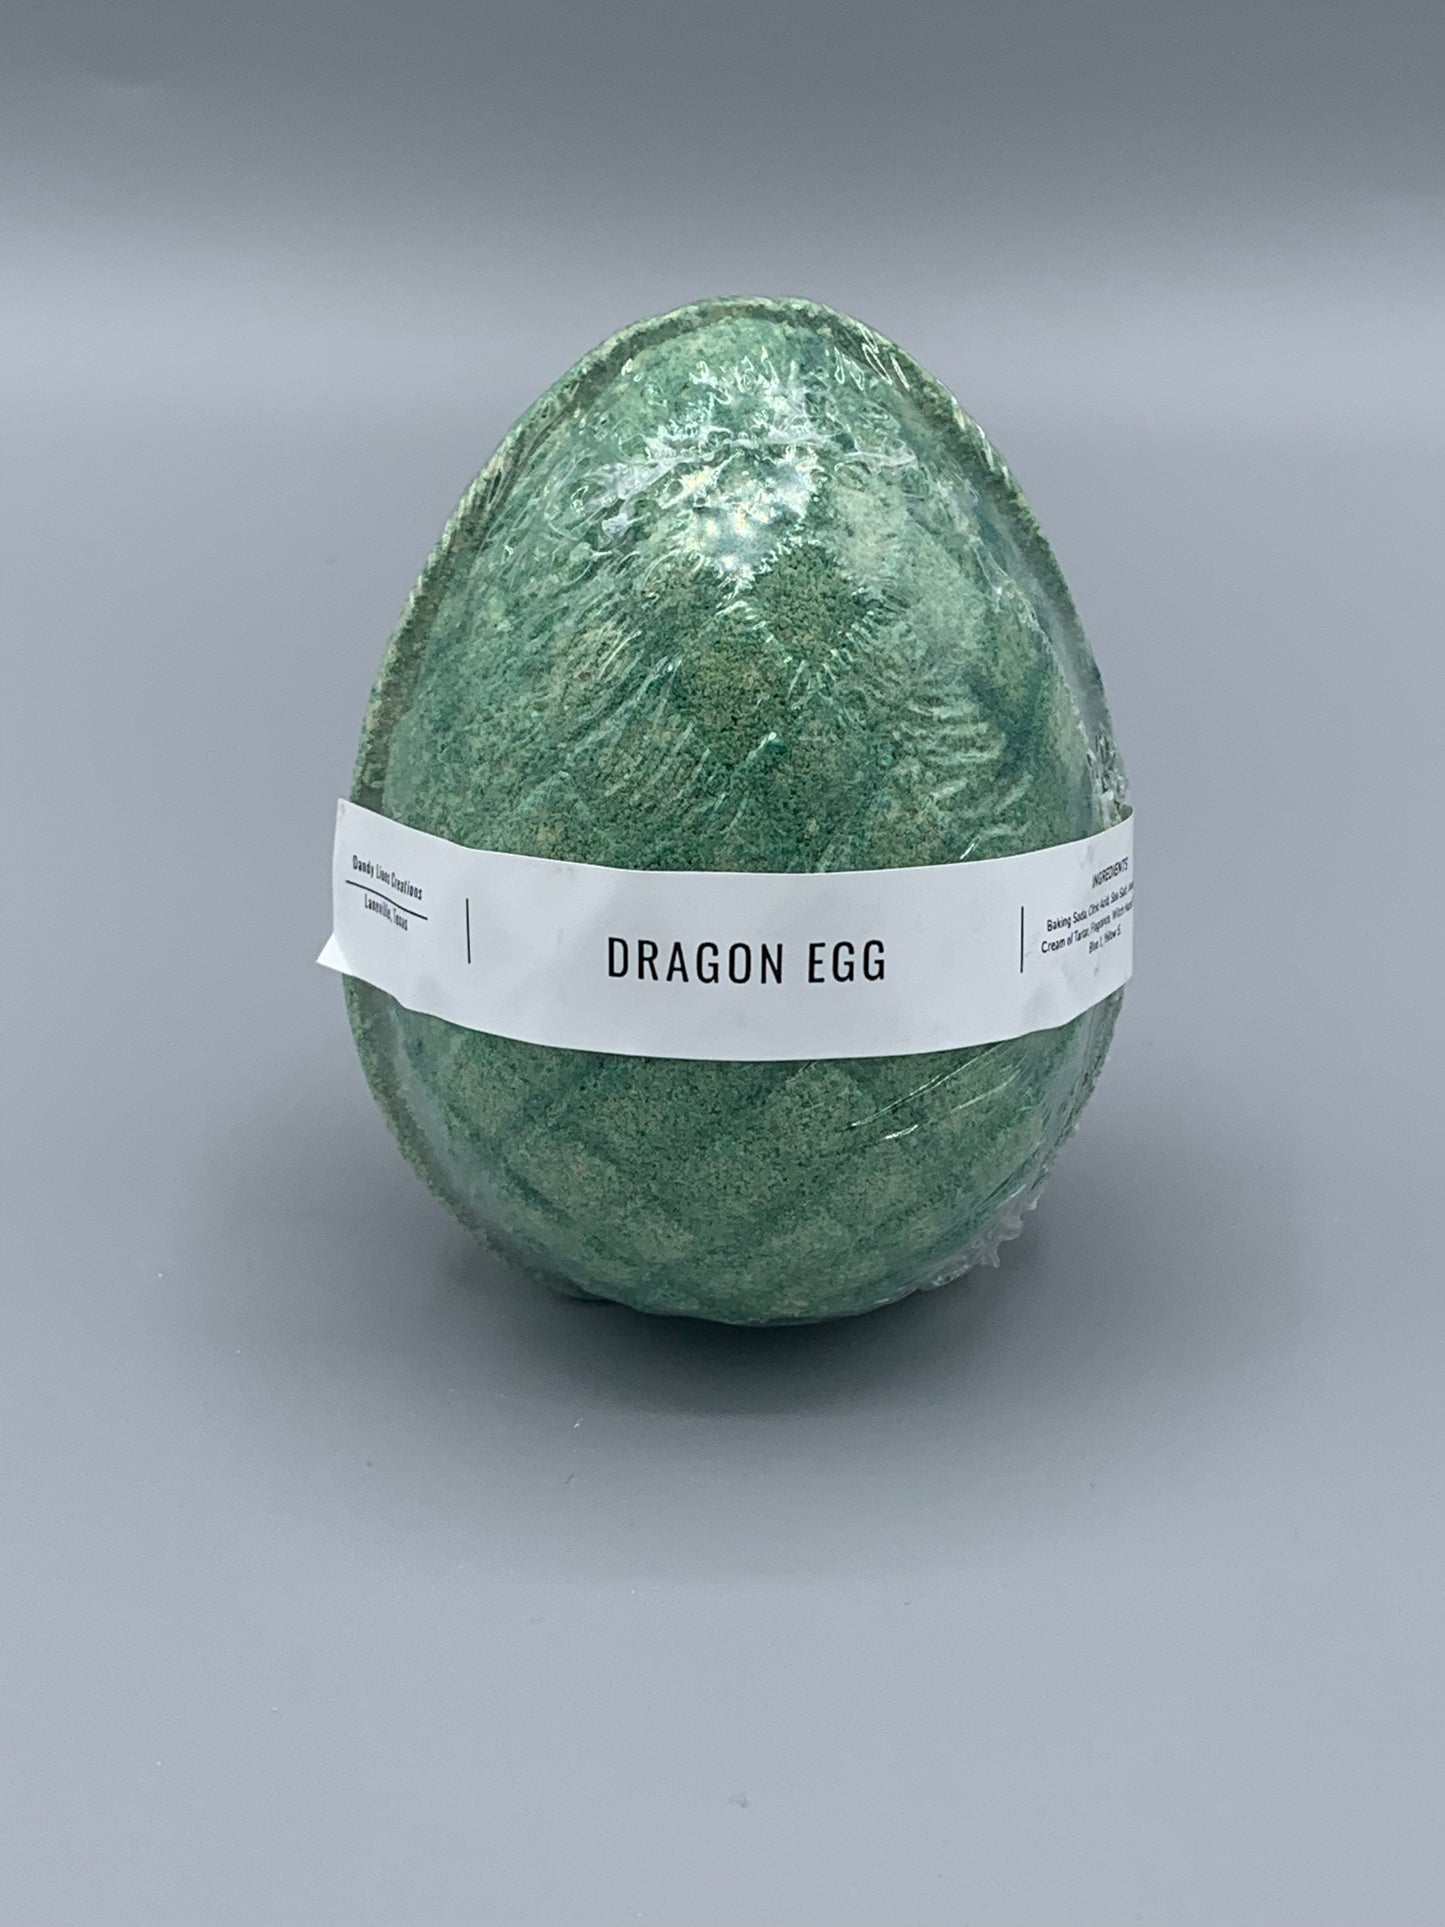 Dragon Egg bath bomb